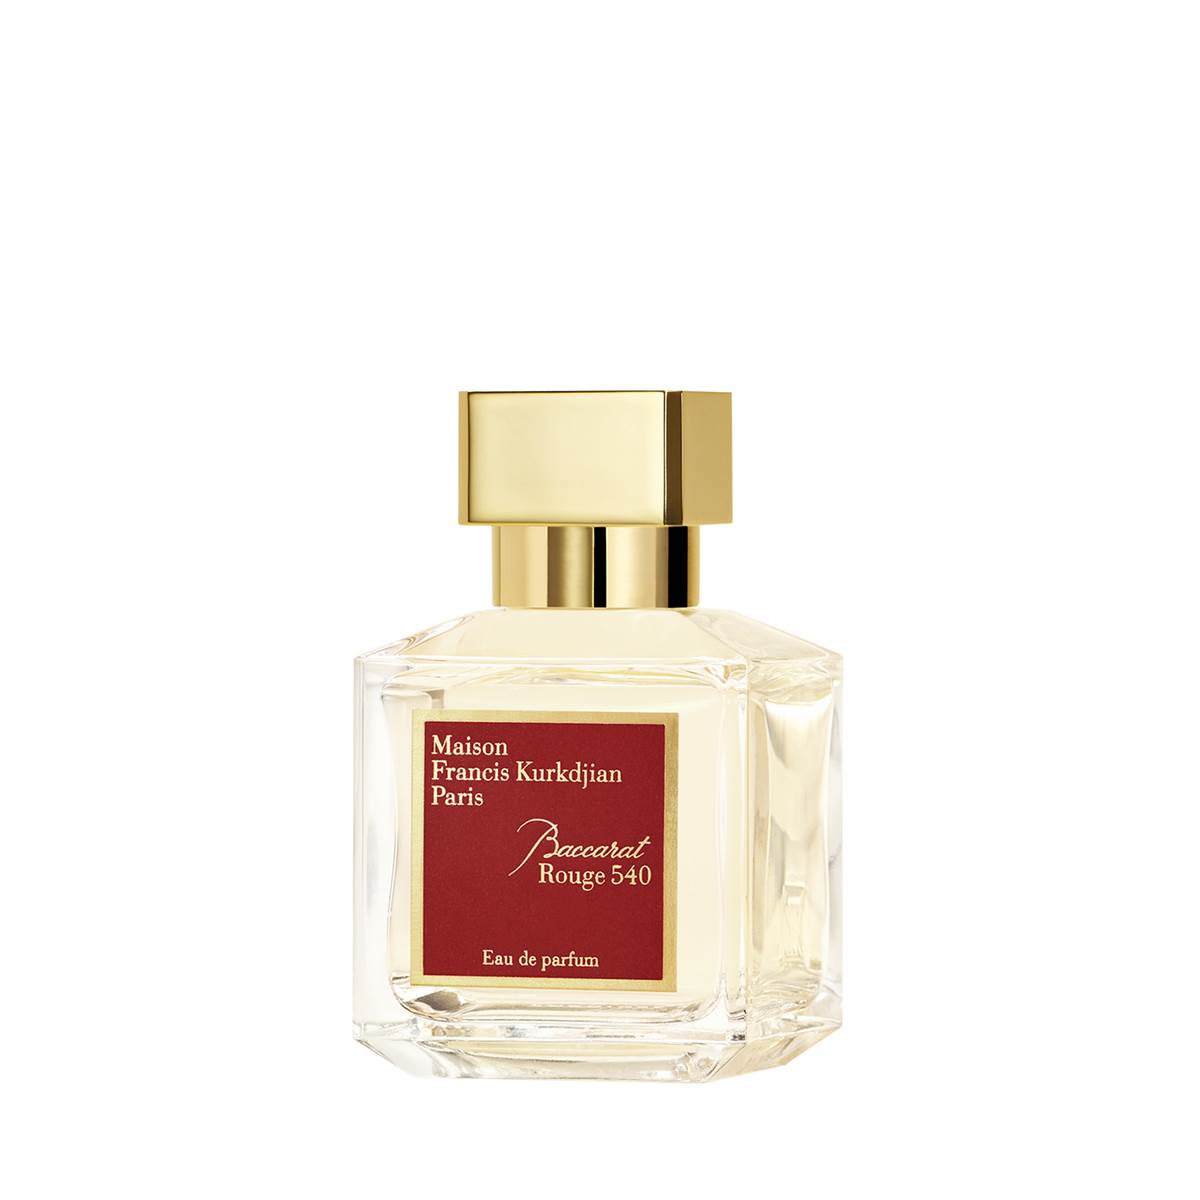 Maison Francis Kurkdjian Baccarat Rouge 540, raskošni buket šafrana i jasmina, 70 ml EDP, 235 € / 1770,61 kn, parfumerija LANA